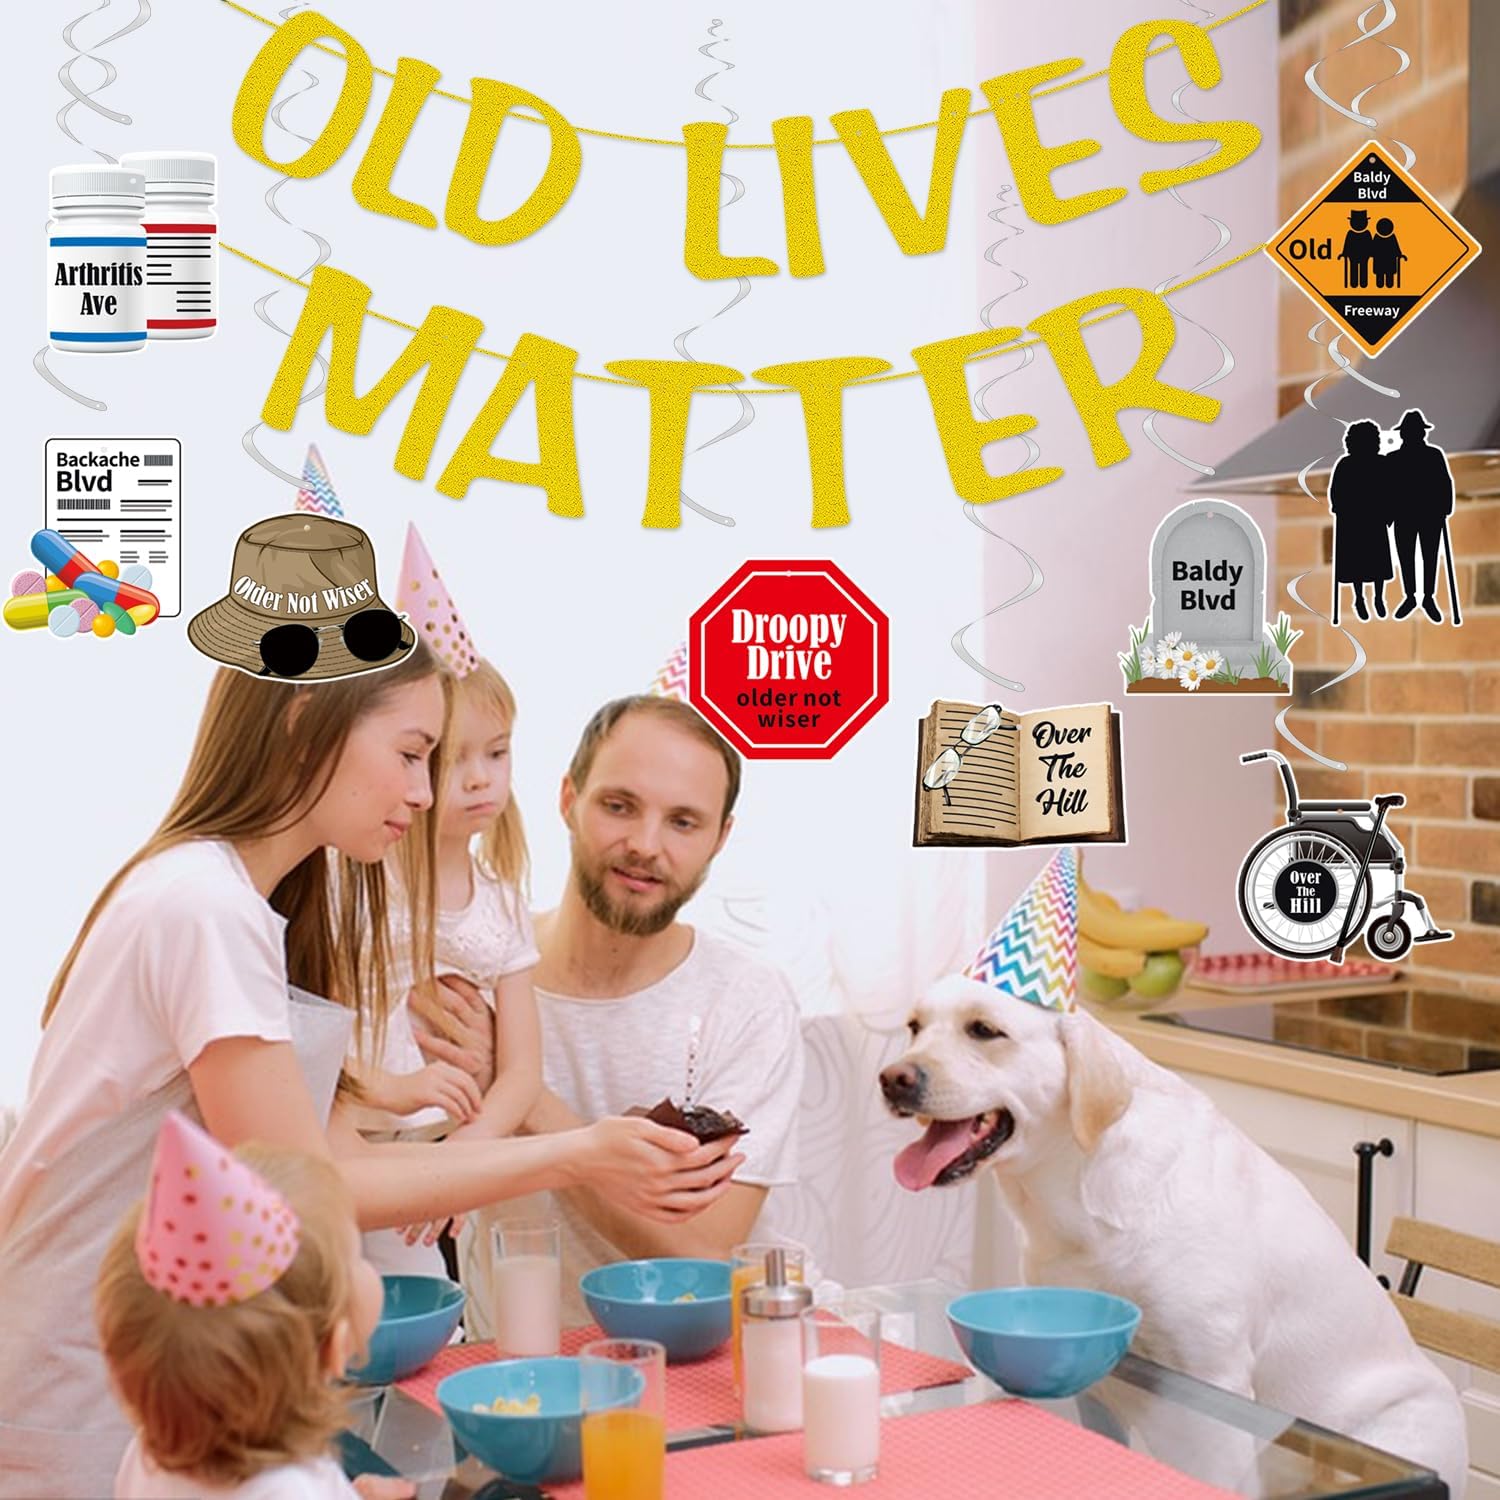 OLD LIVES MATTER Banner Review